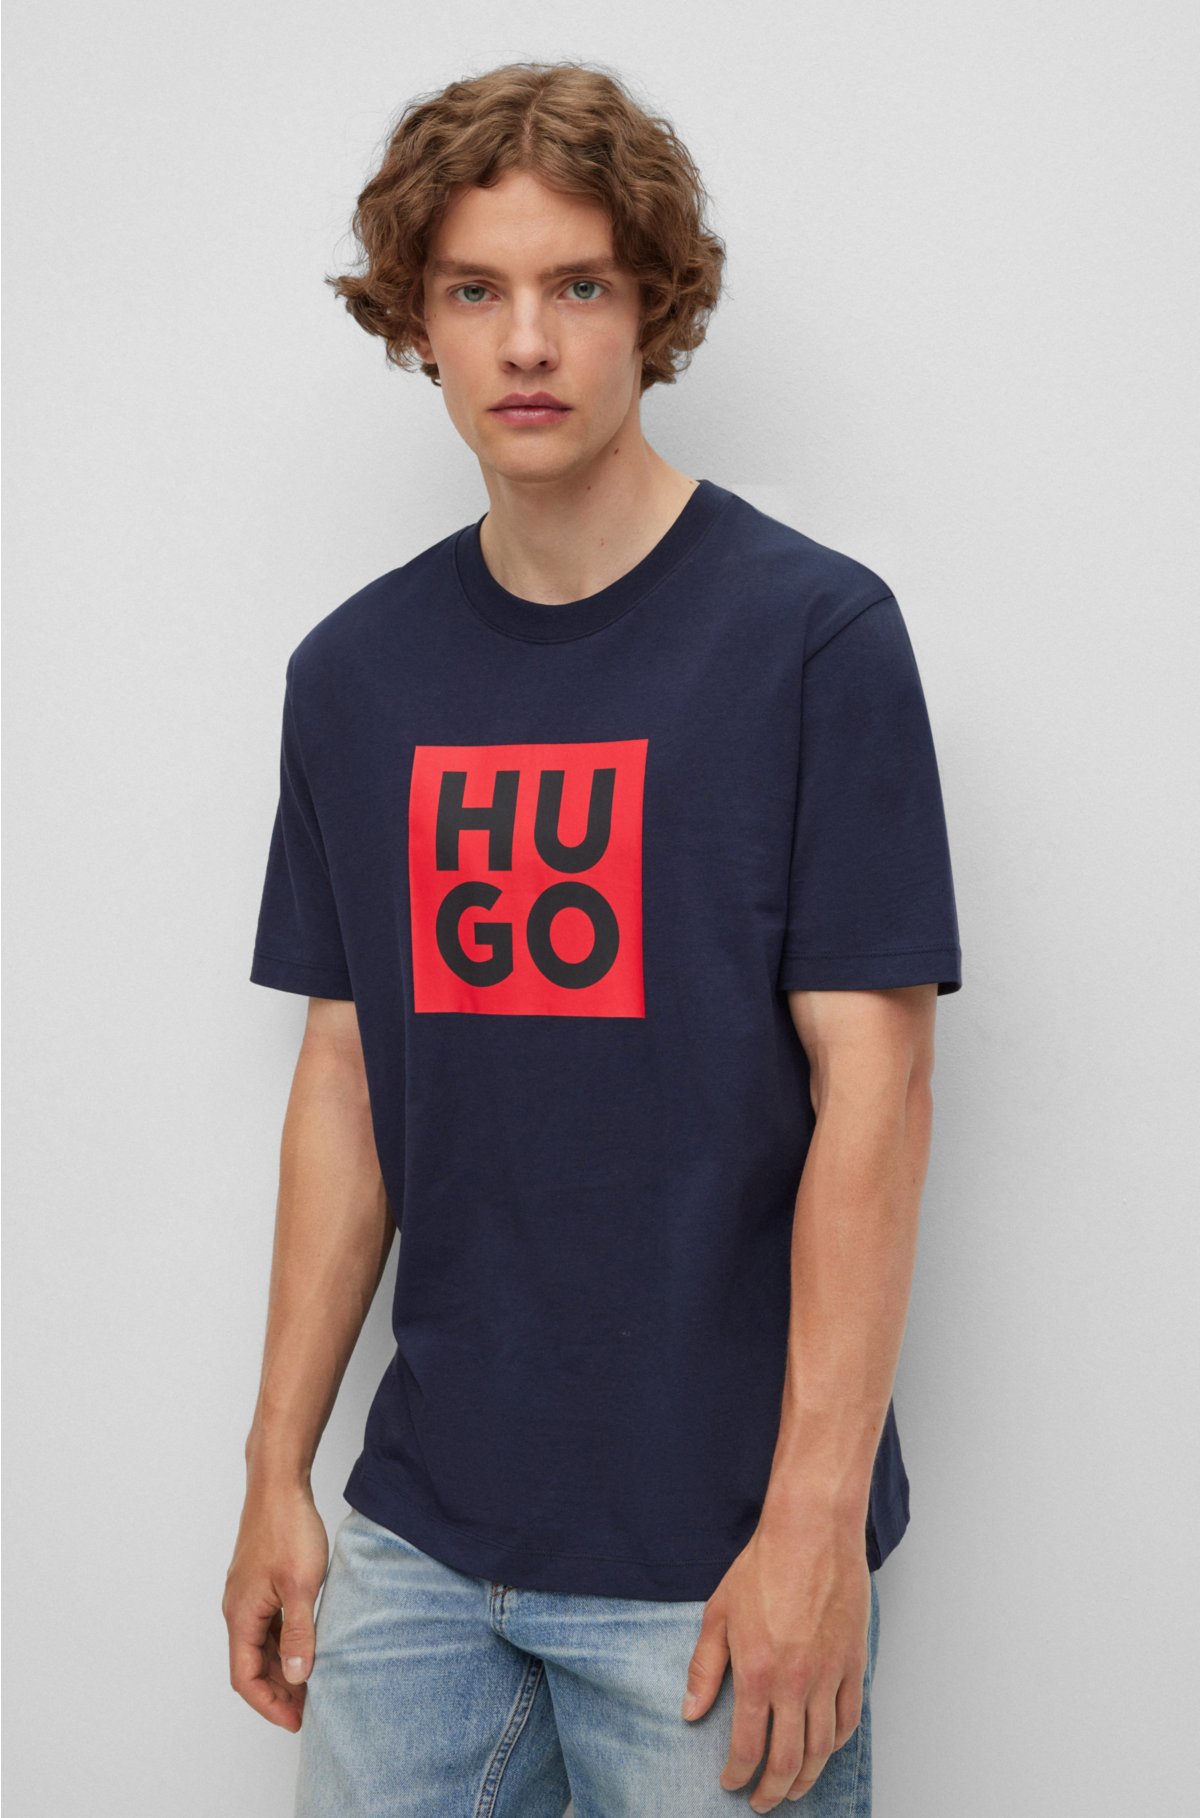 Pima jersey T-shirt with logo print